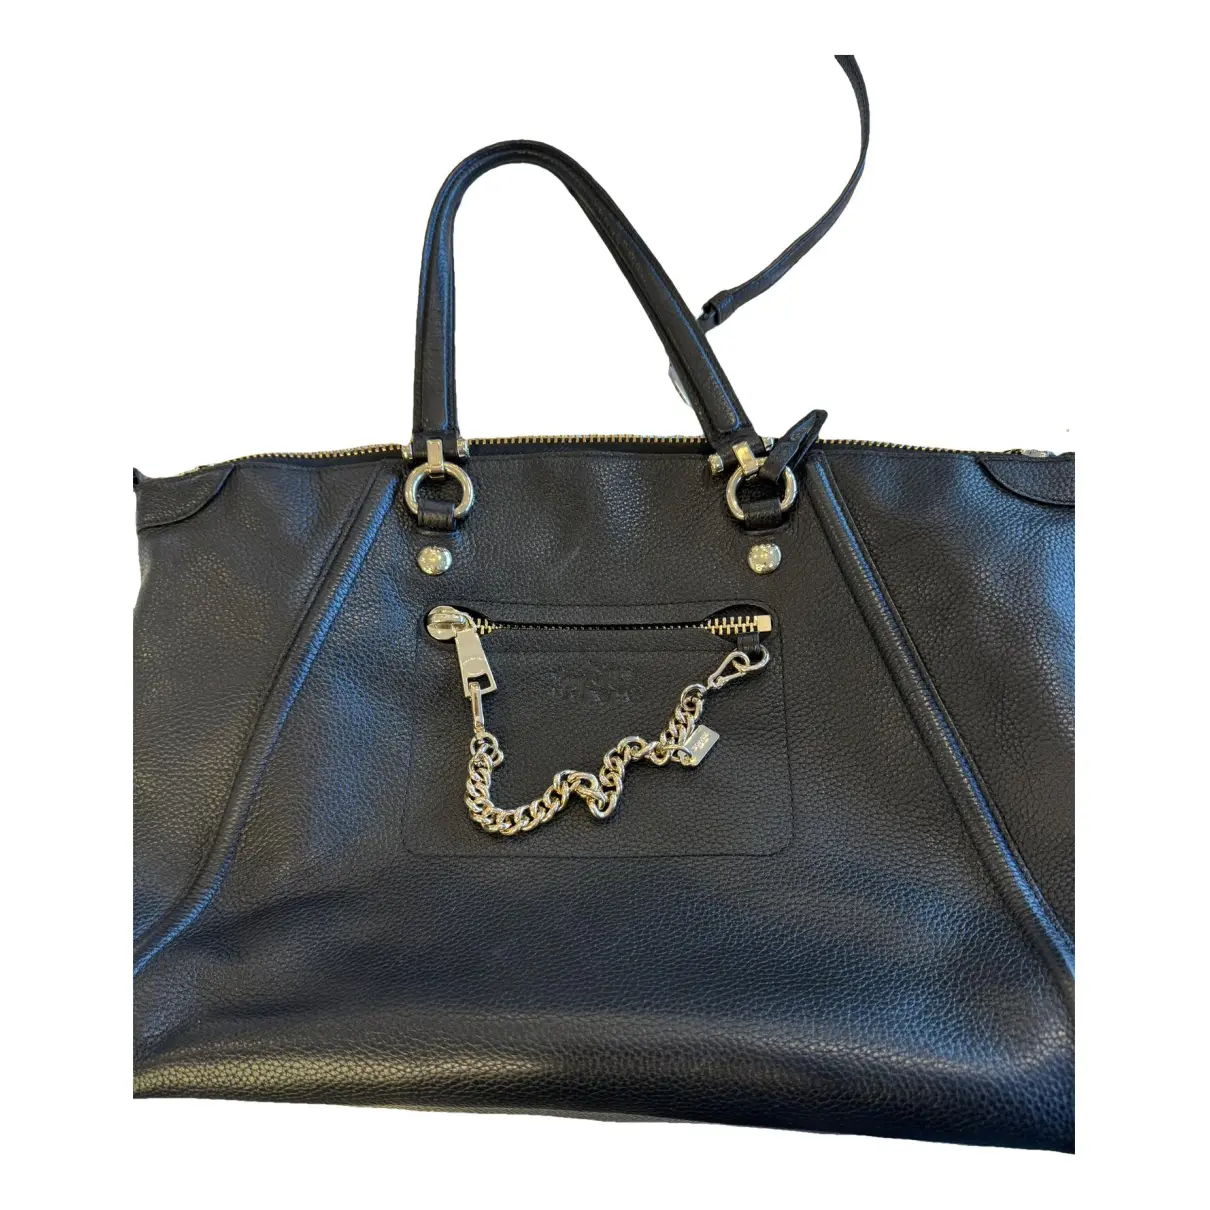 Buy Coach Prairie Satchel leather handbag online